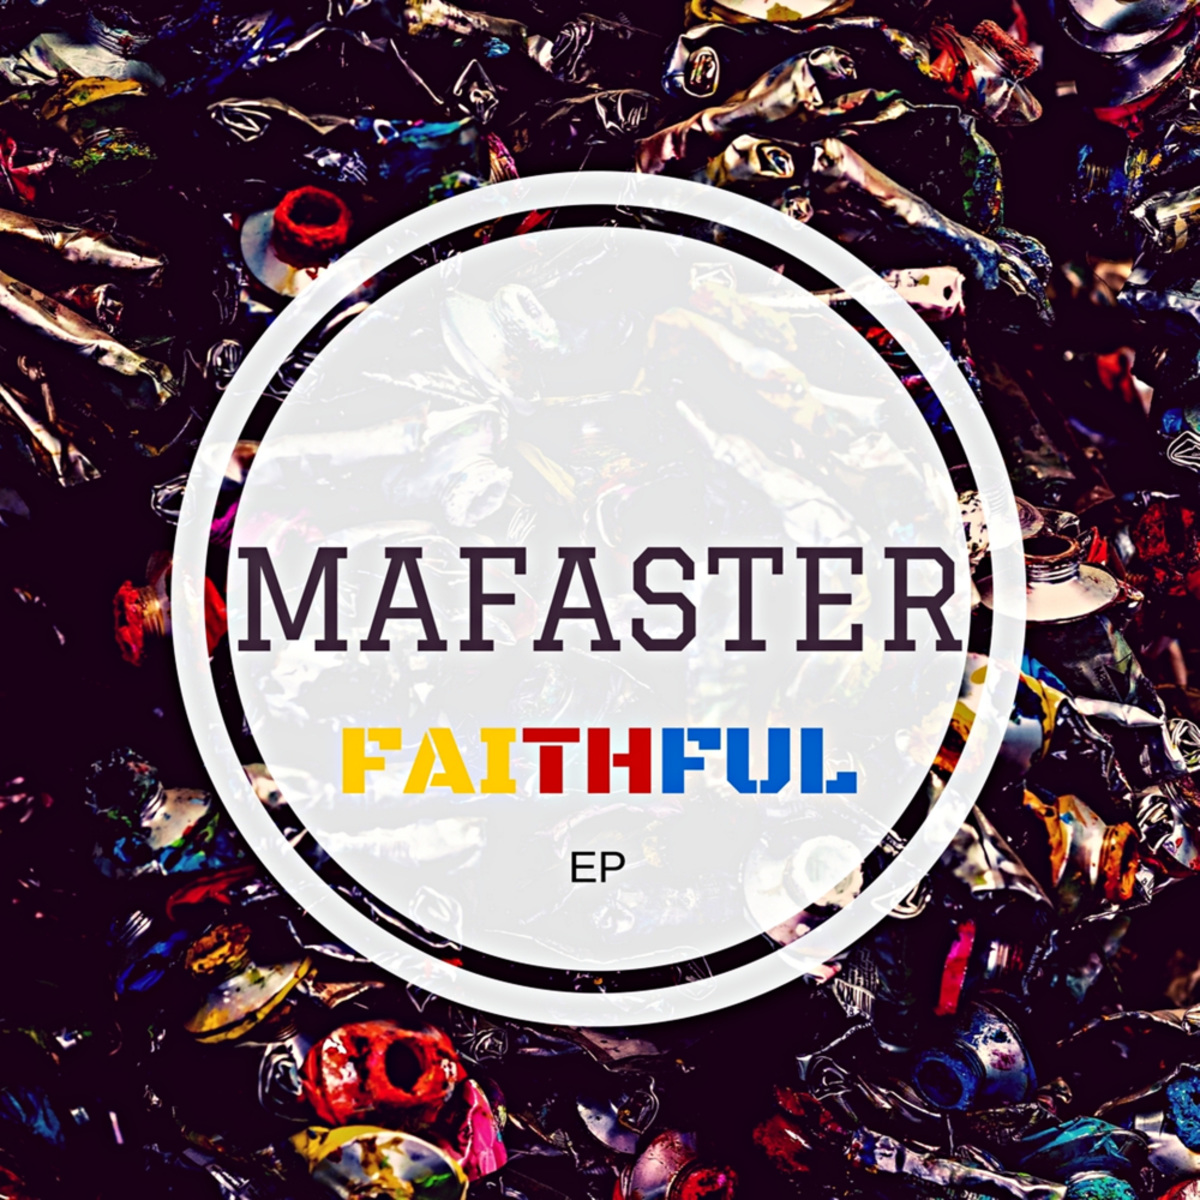 Mafaster - Faithful Ep / OneBigFamily Records